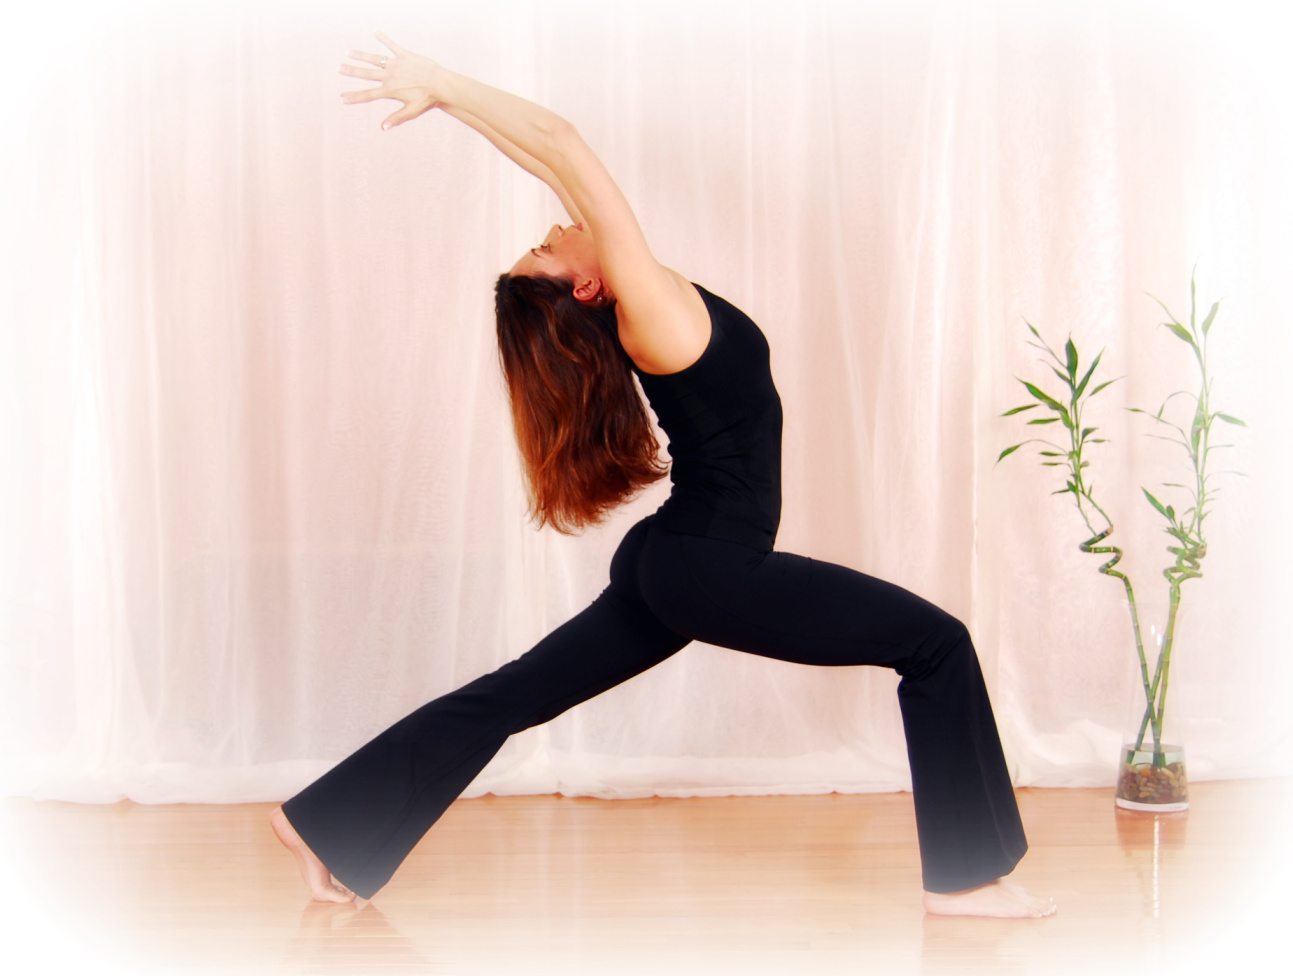 Backbending during yoga photo shoot